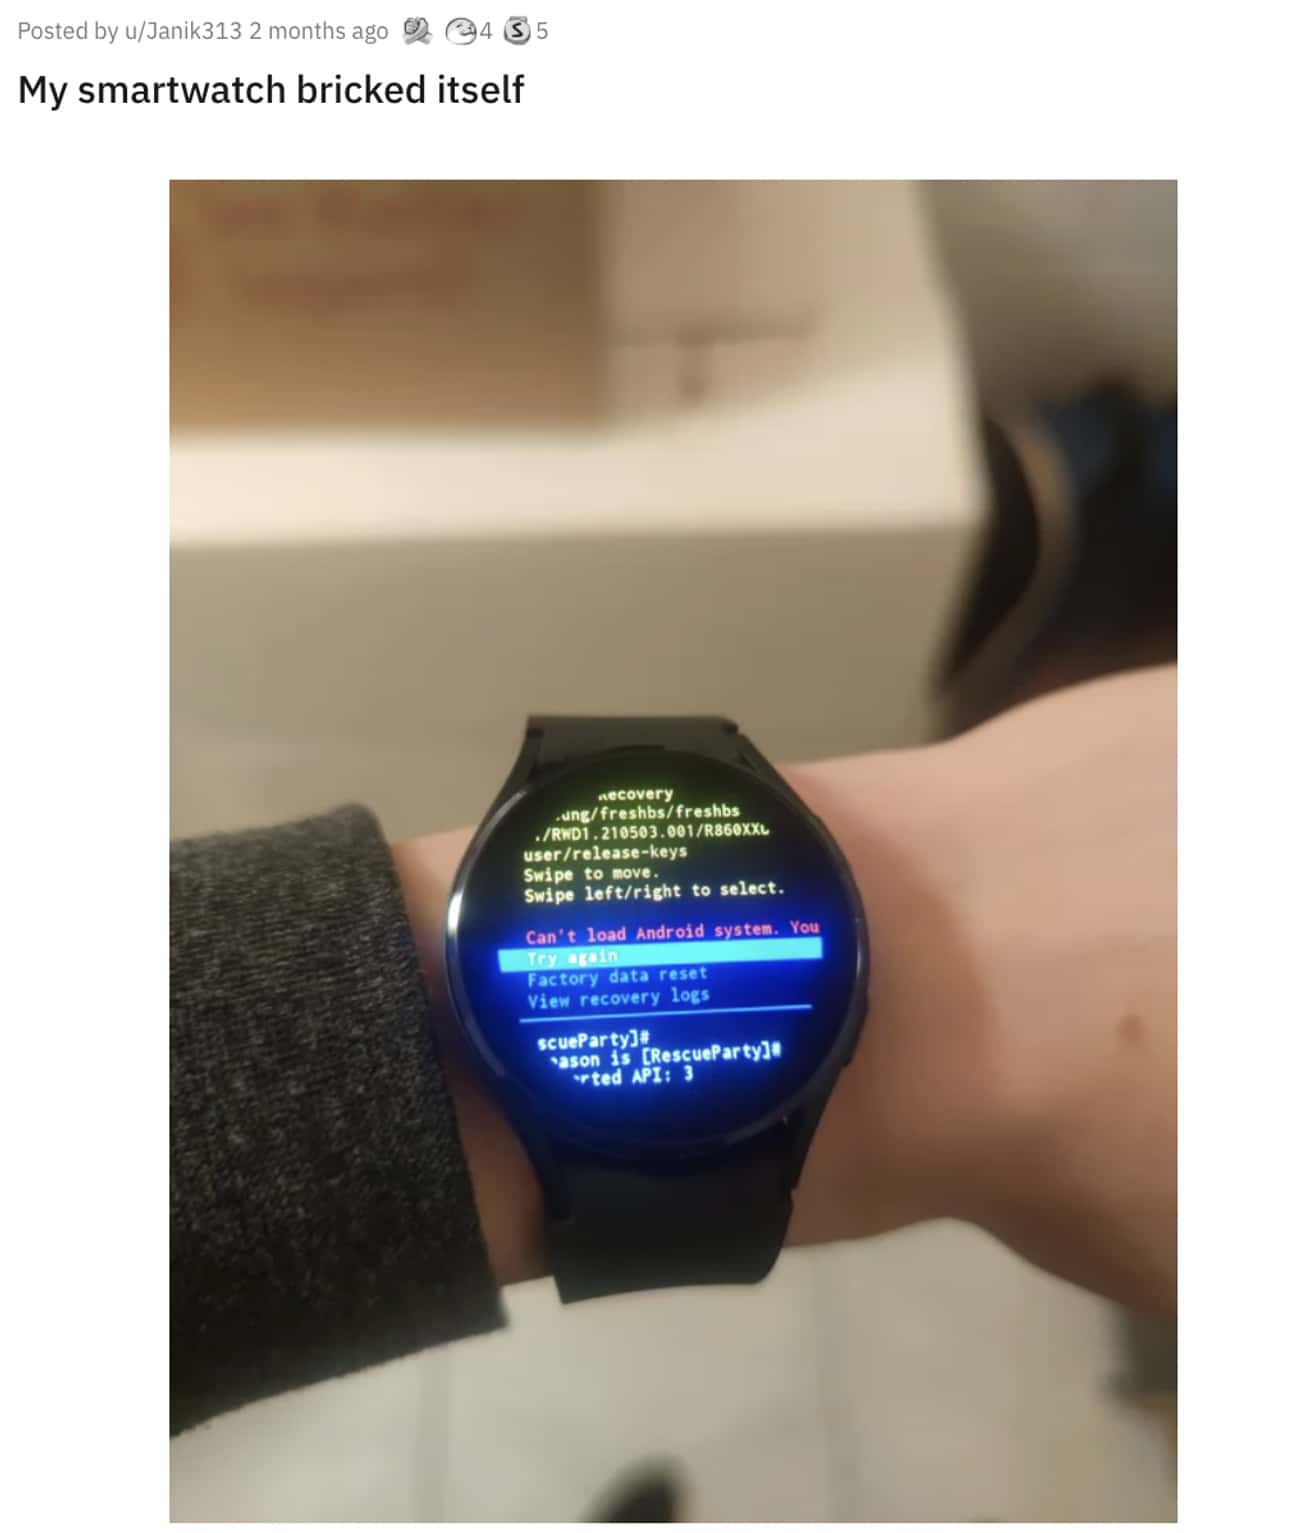 "Smart" Watch